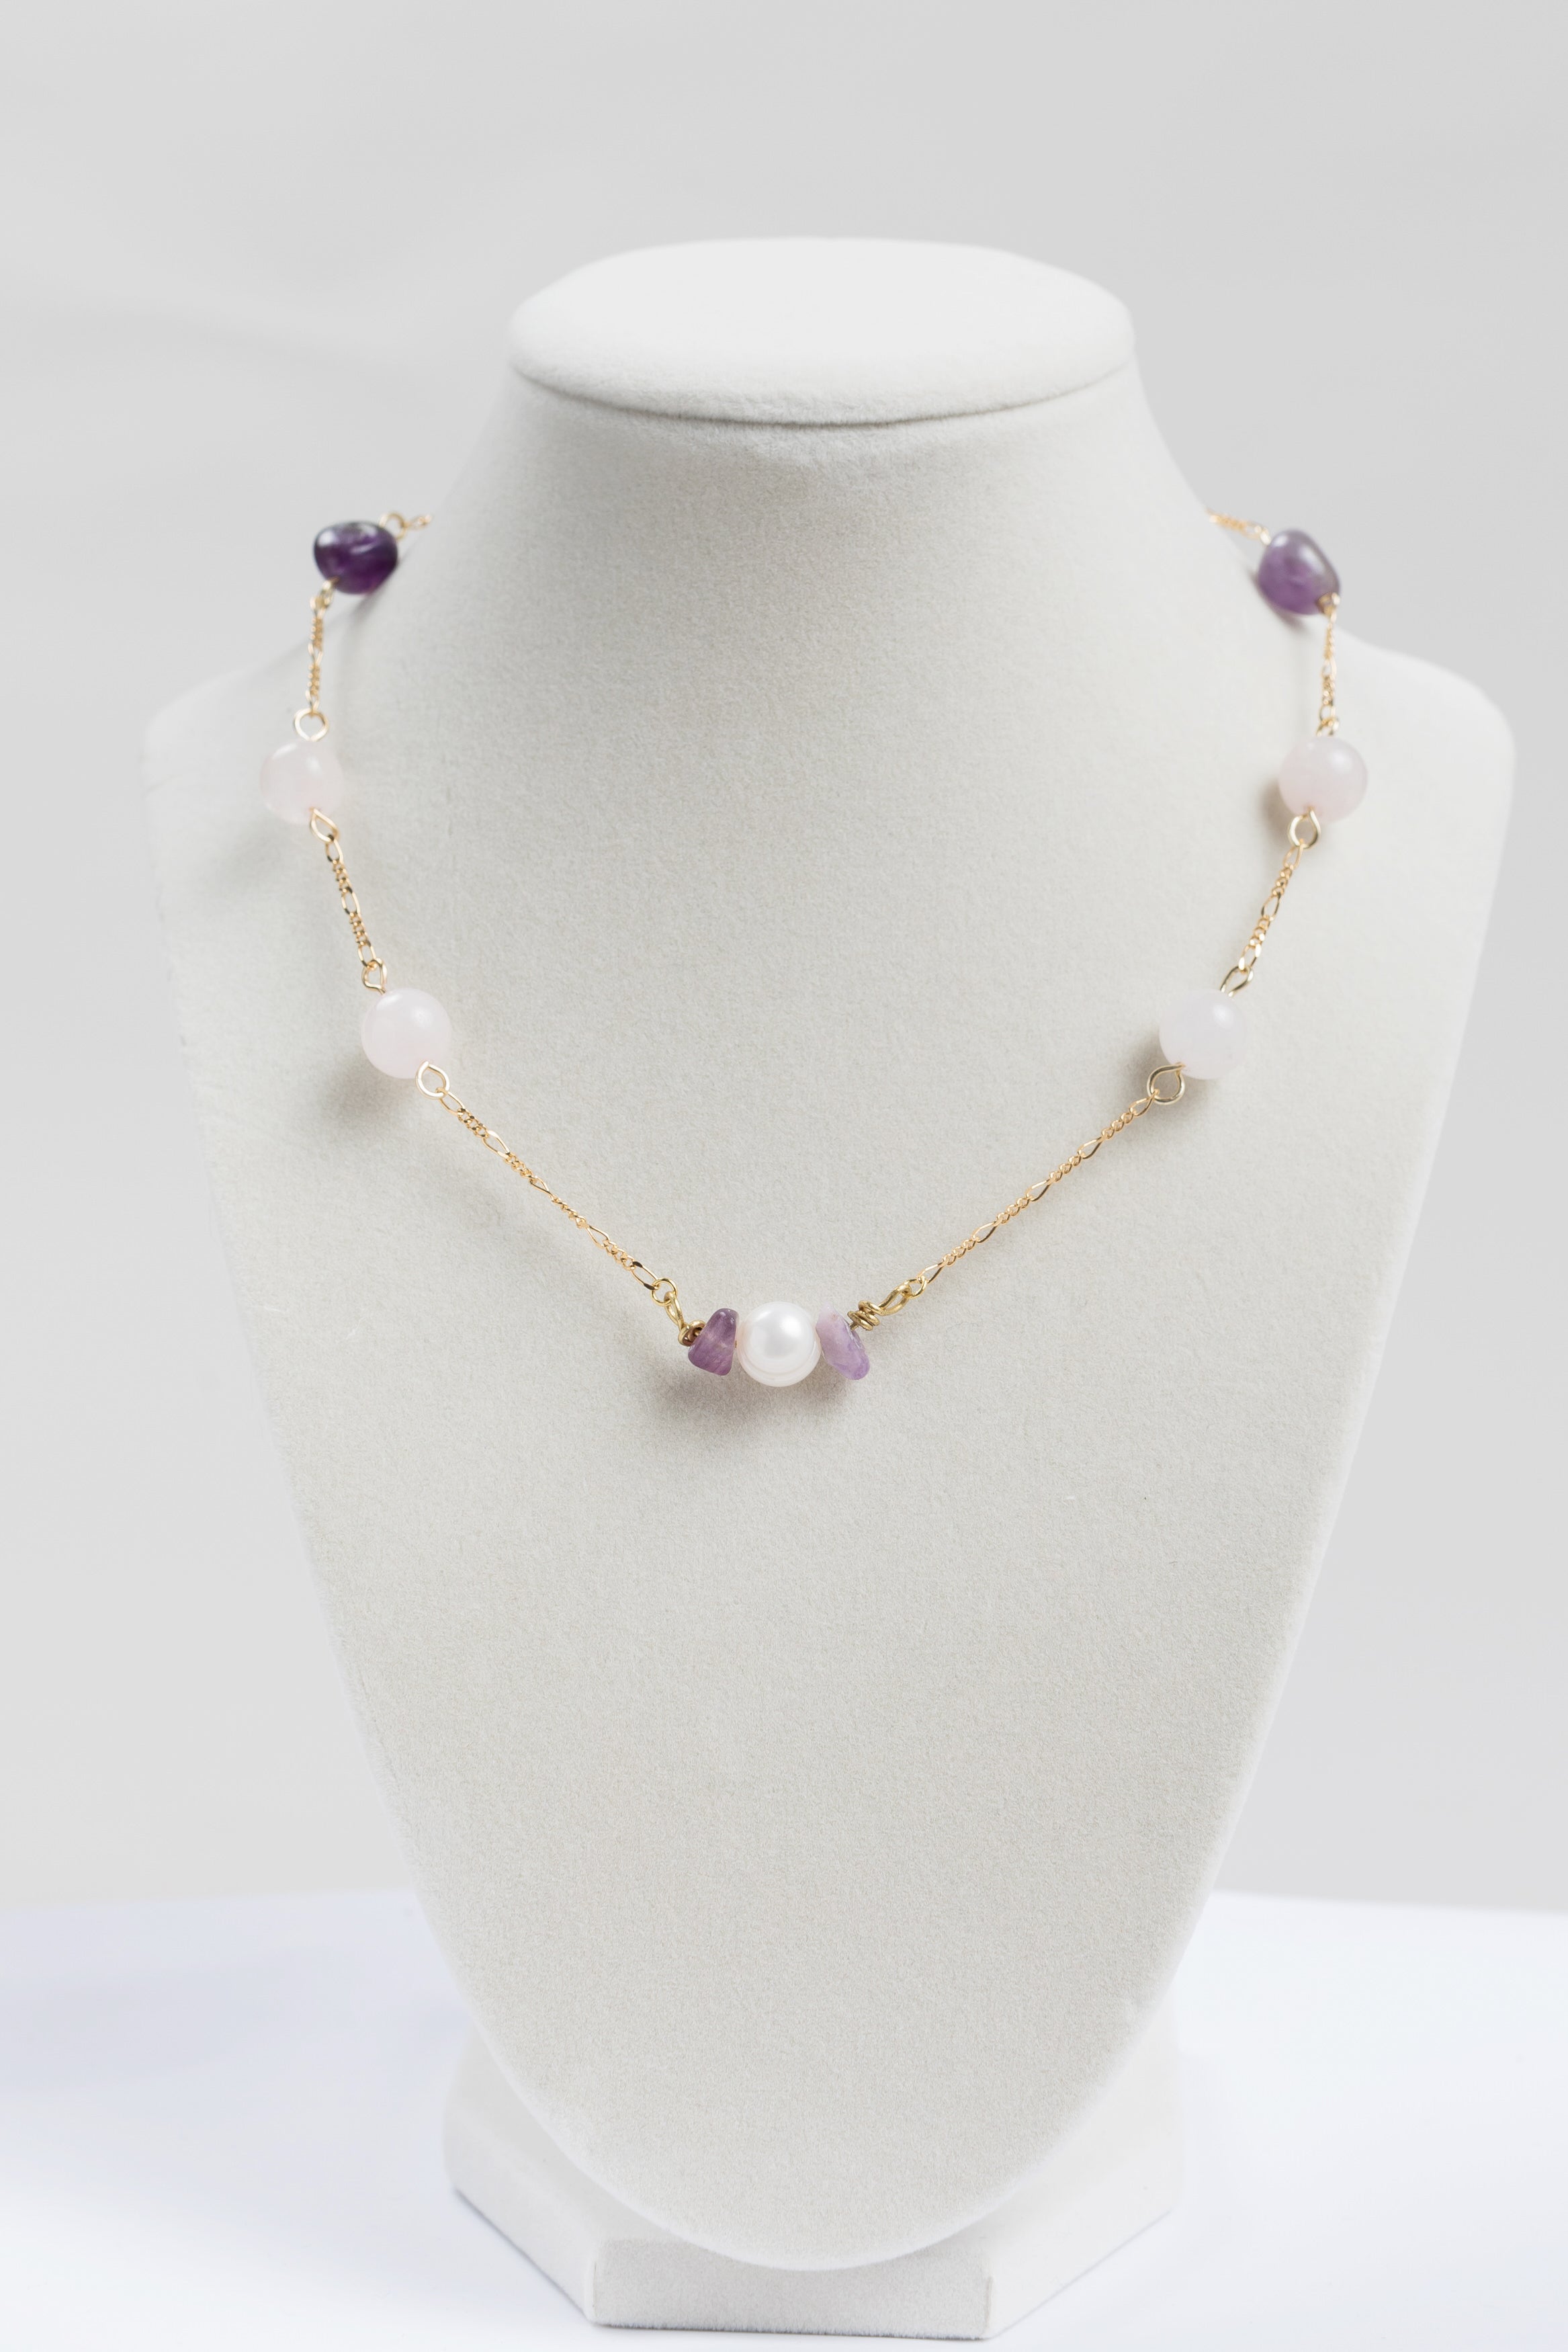 Larki Designs Gold Chain & Pink & Purple Stone Choker Necklace